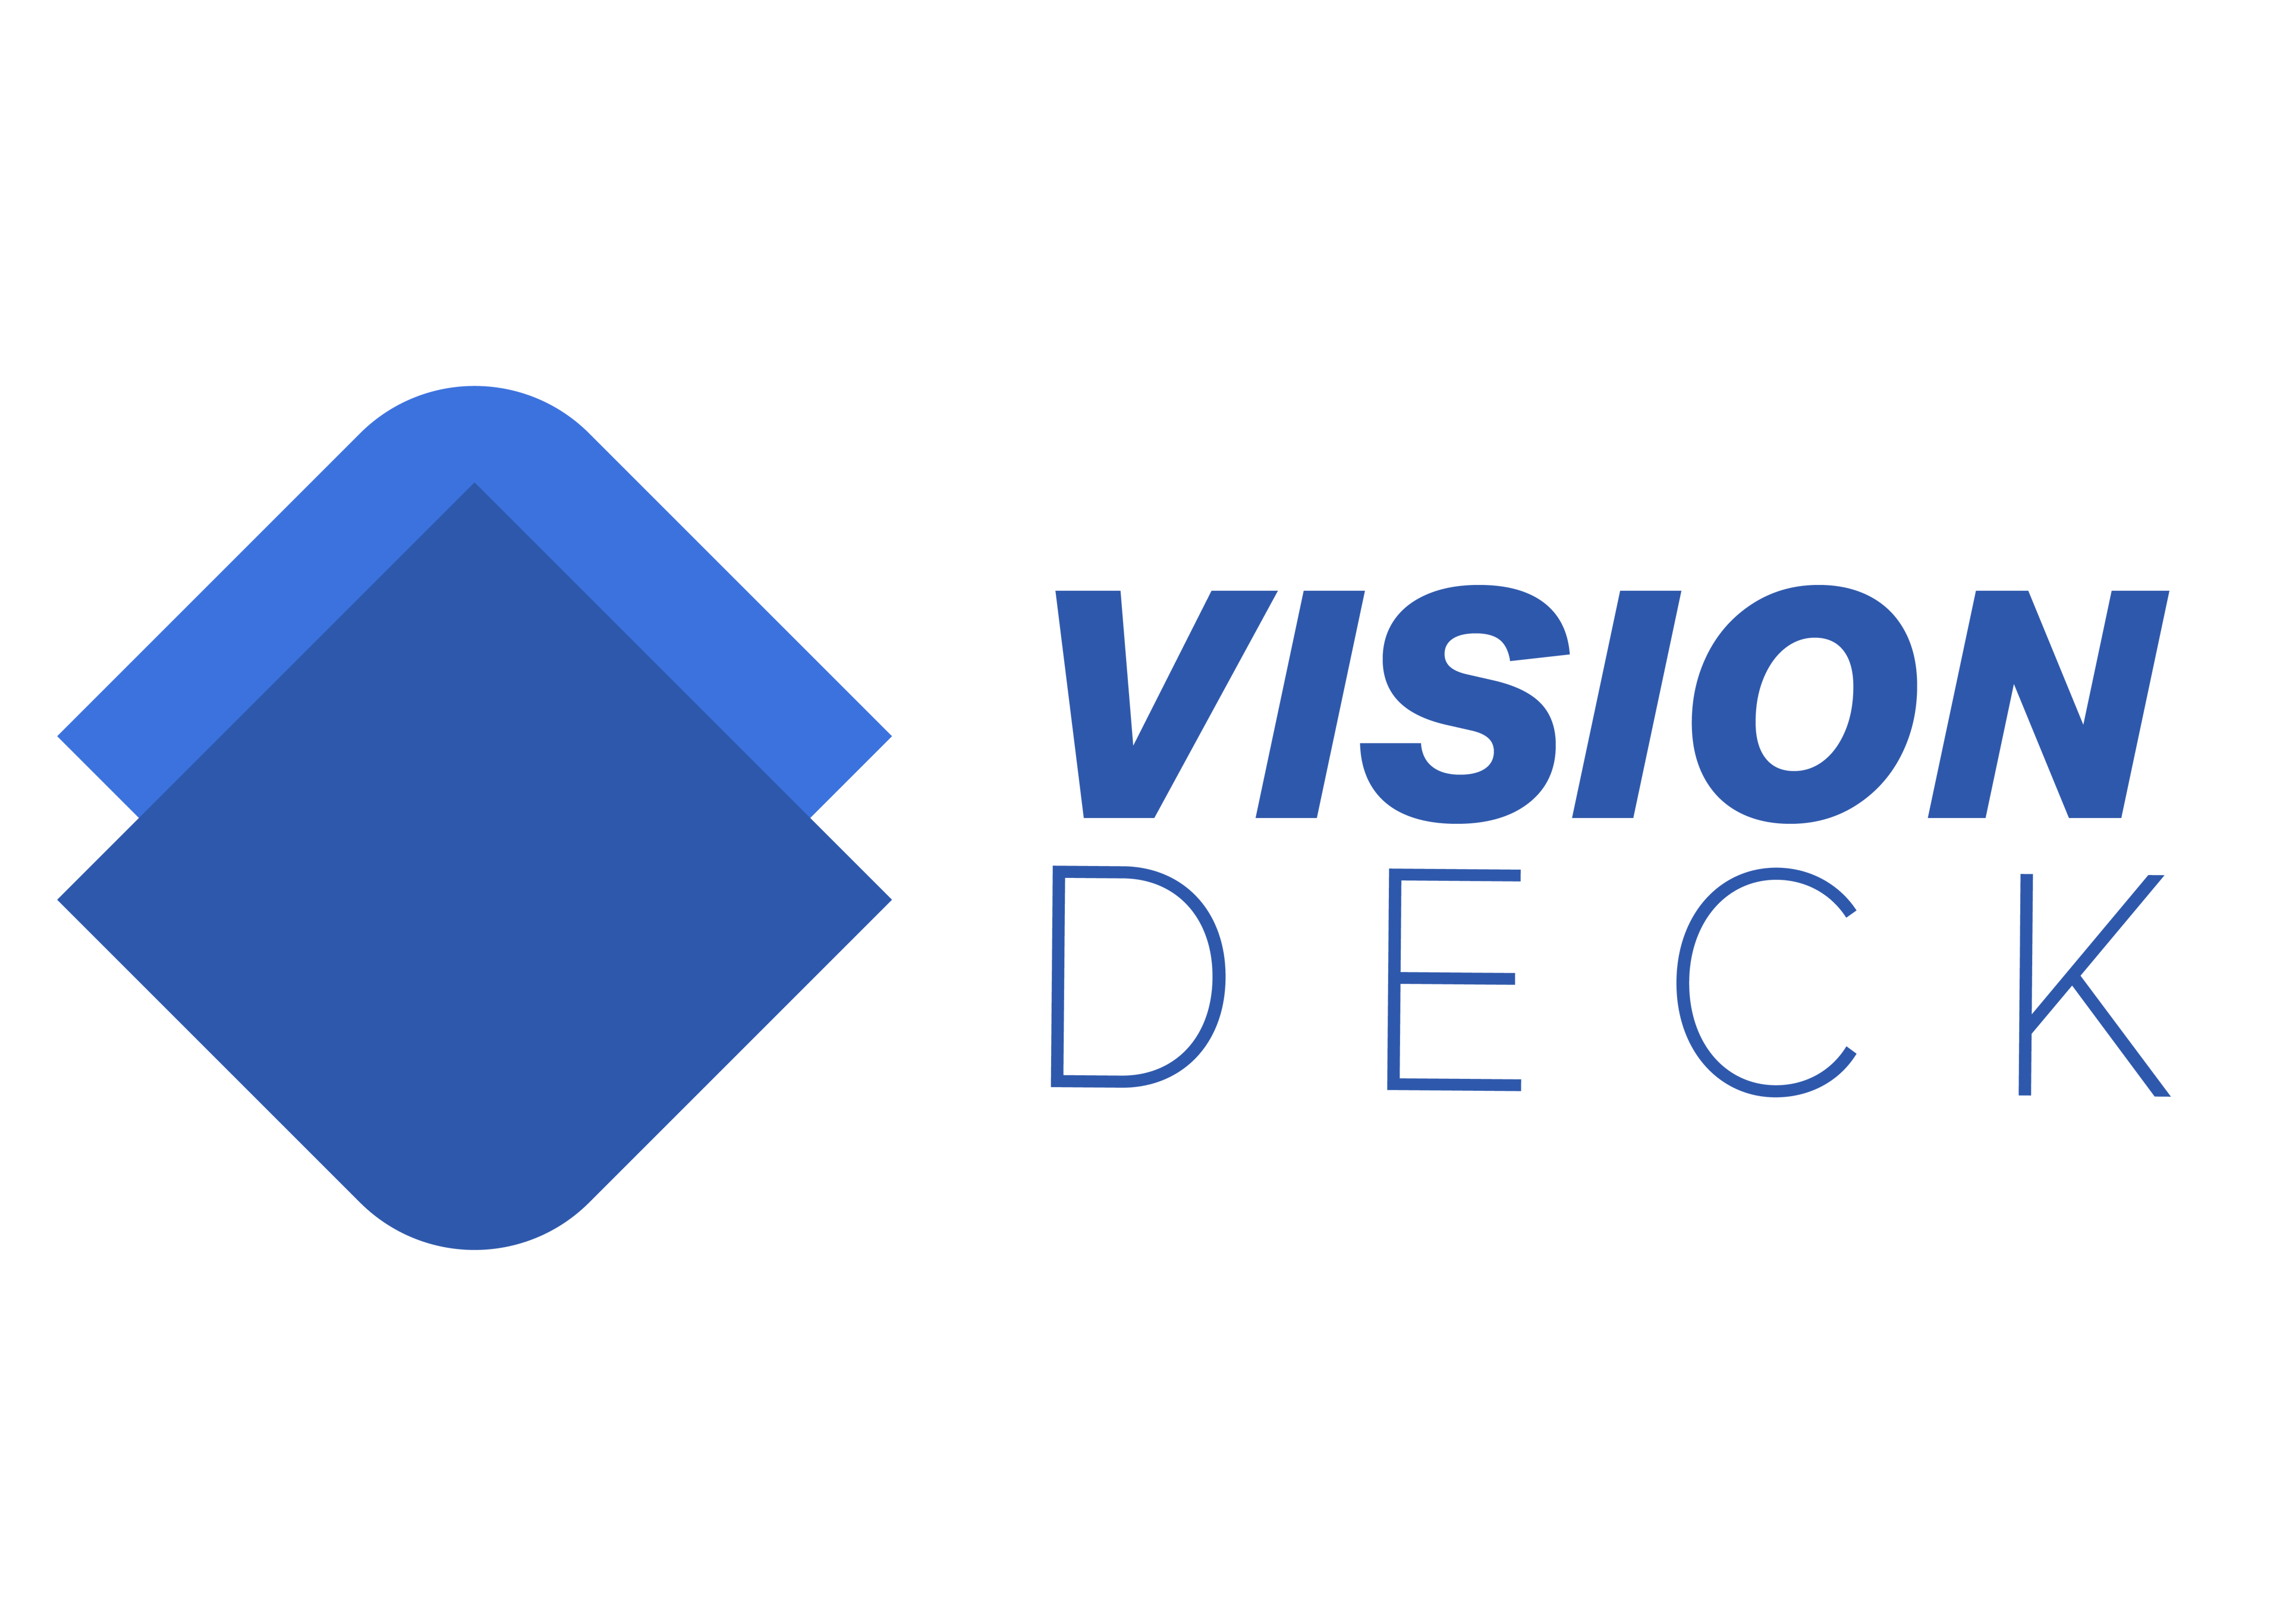 Meet Vision Deck, IT Outsourcing Services